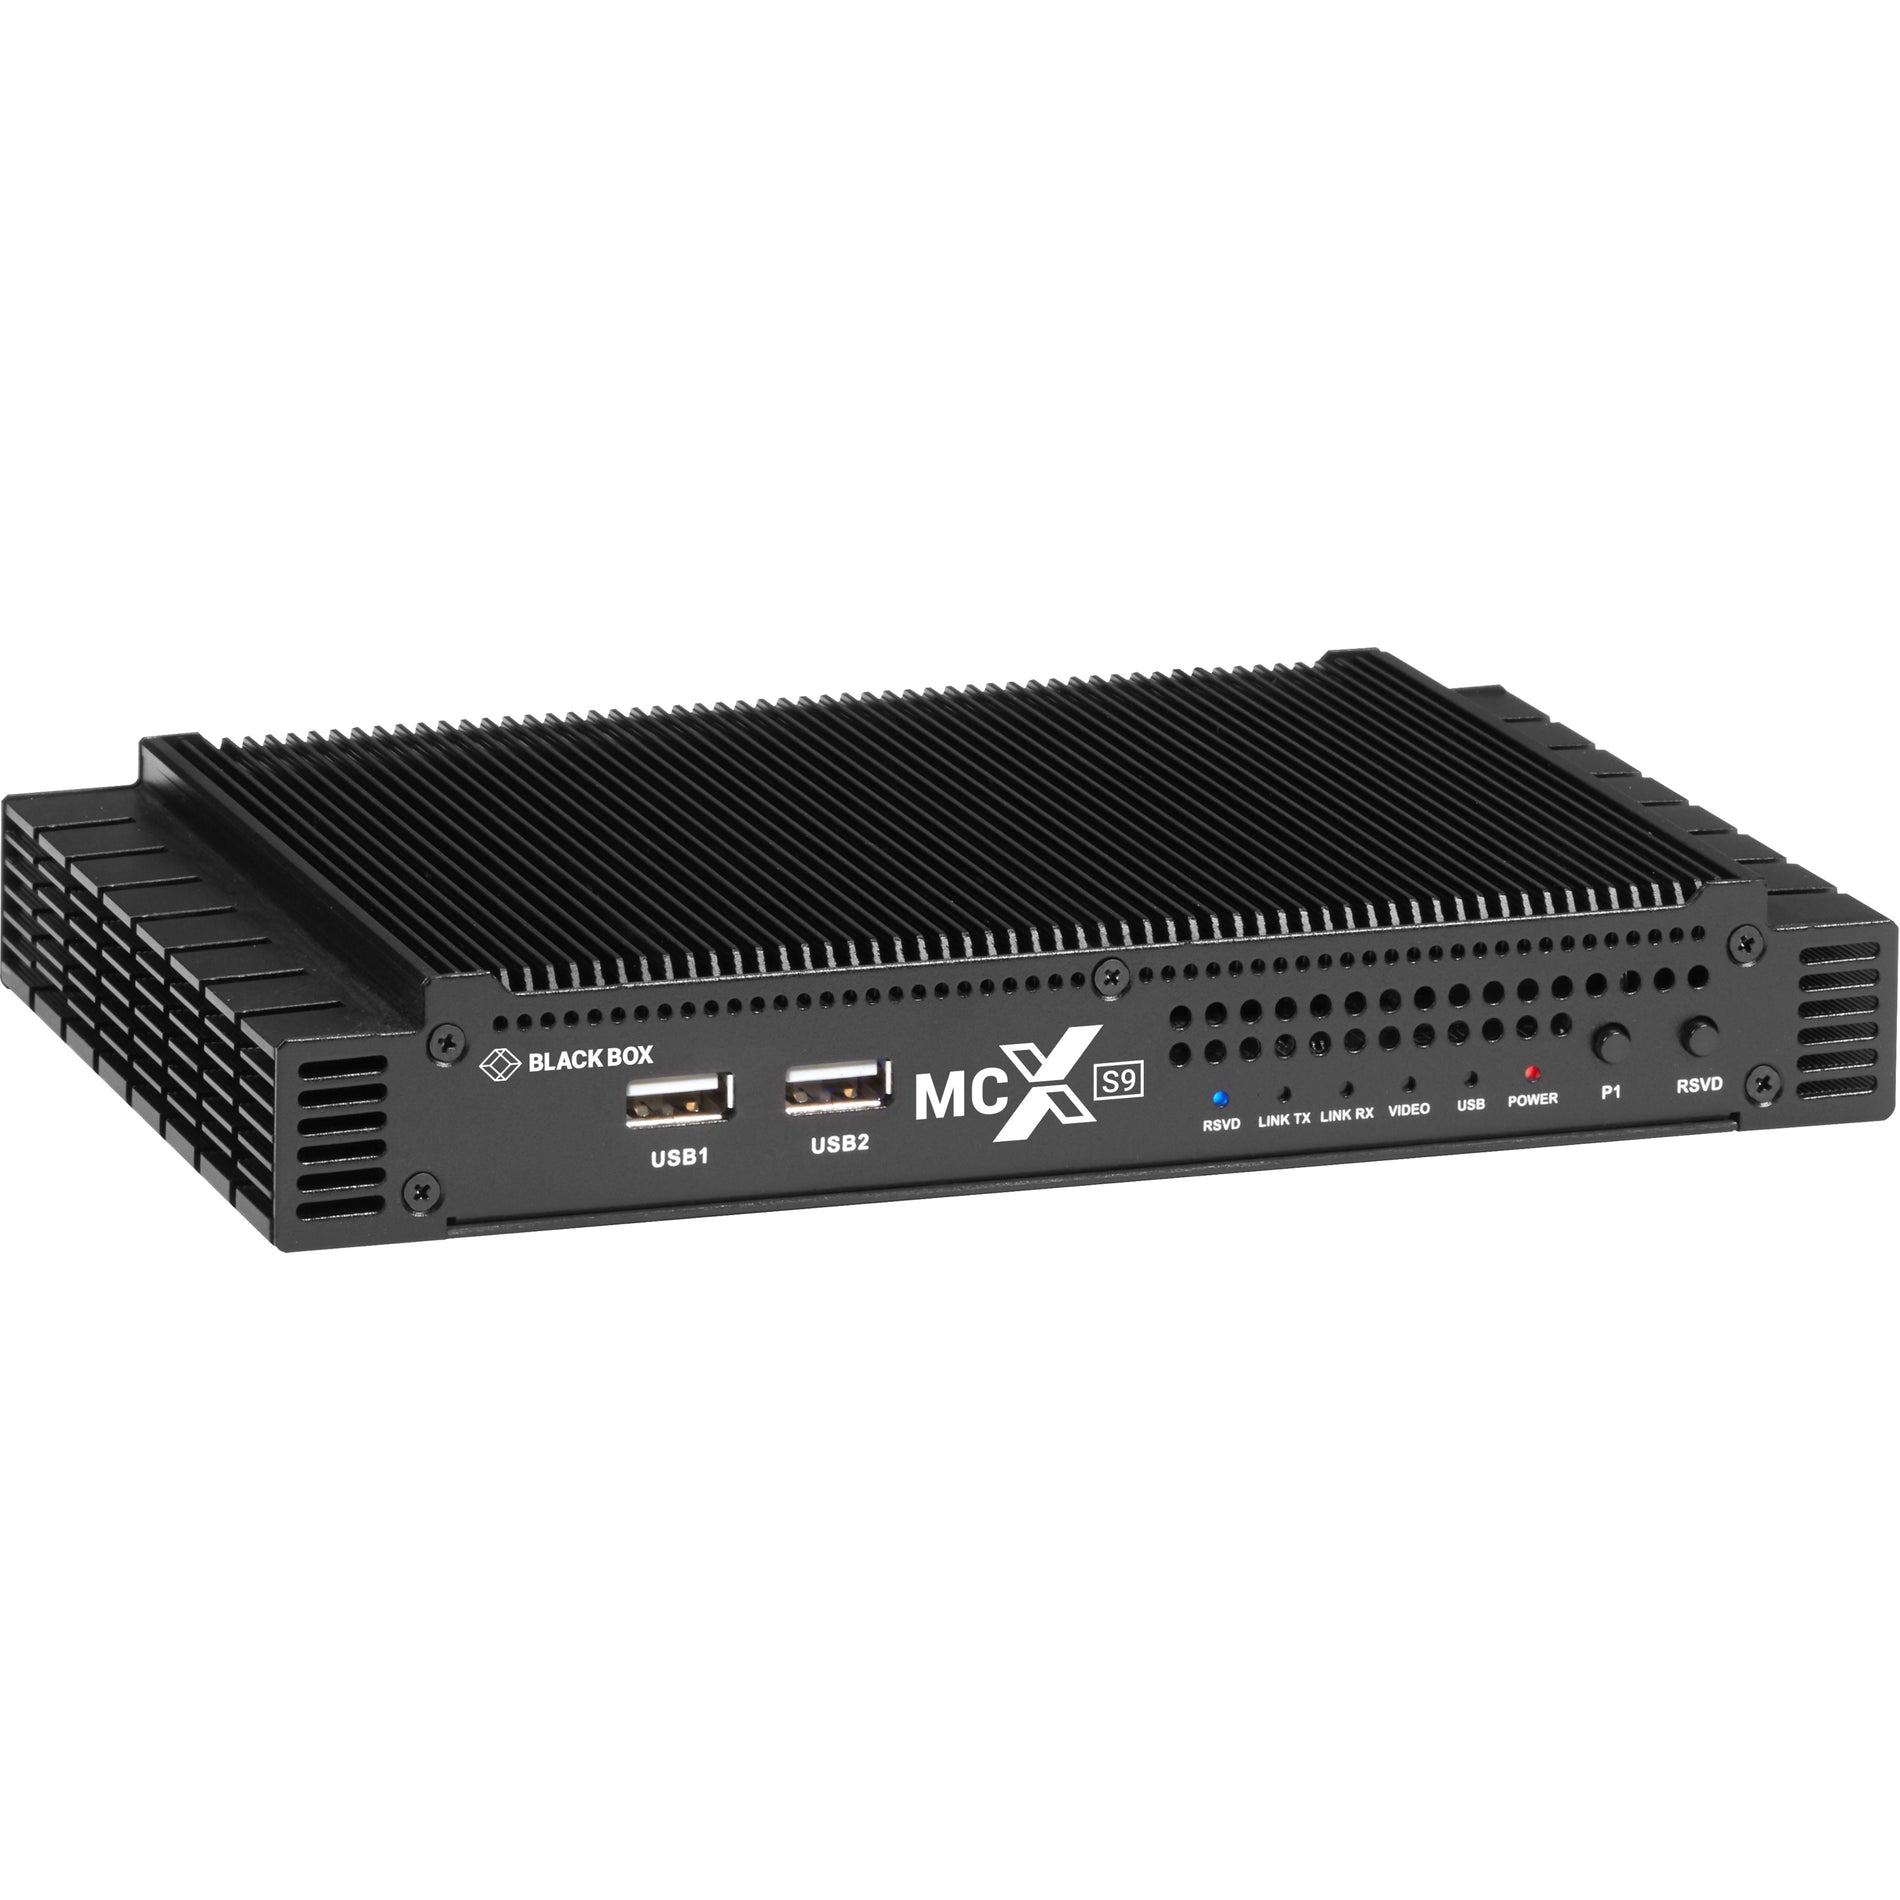 Black Box MCX-S9-DEC MCX S9 Decoder, Video Decoding, Video Switcher, Video Scaling, Audio Decoder